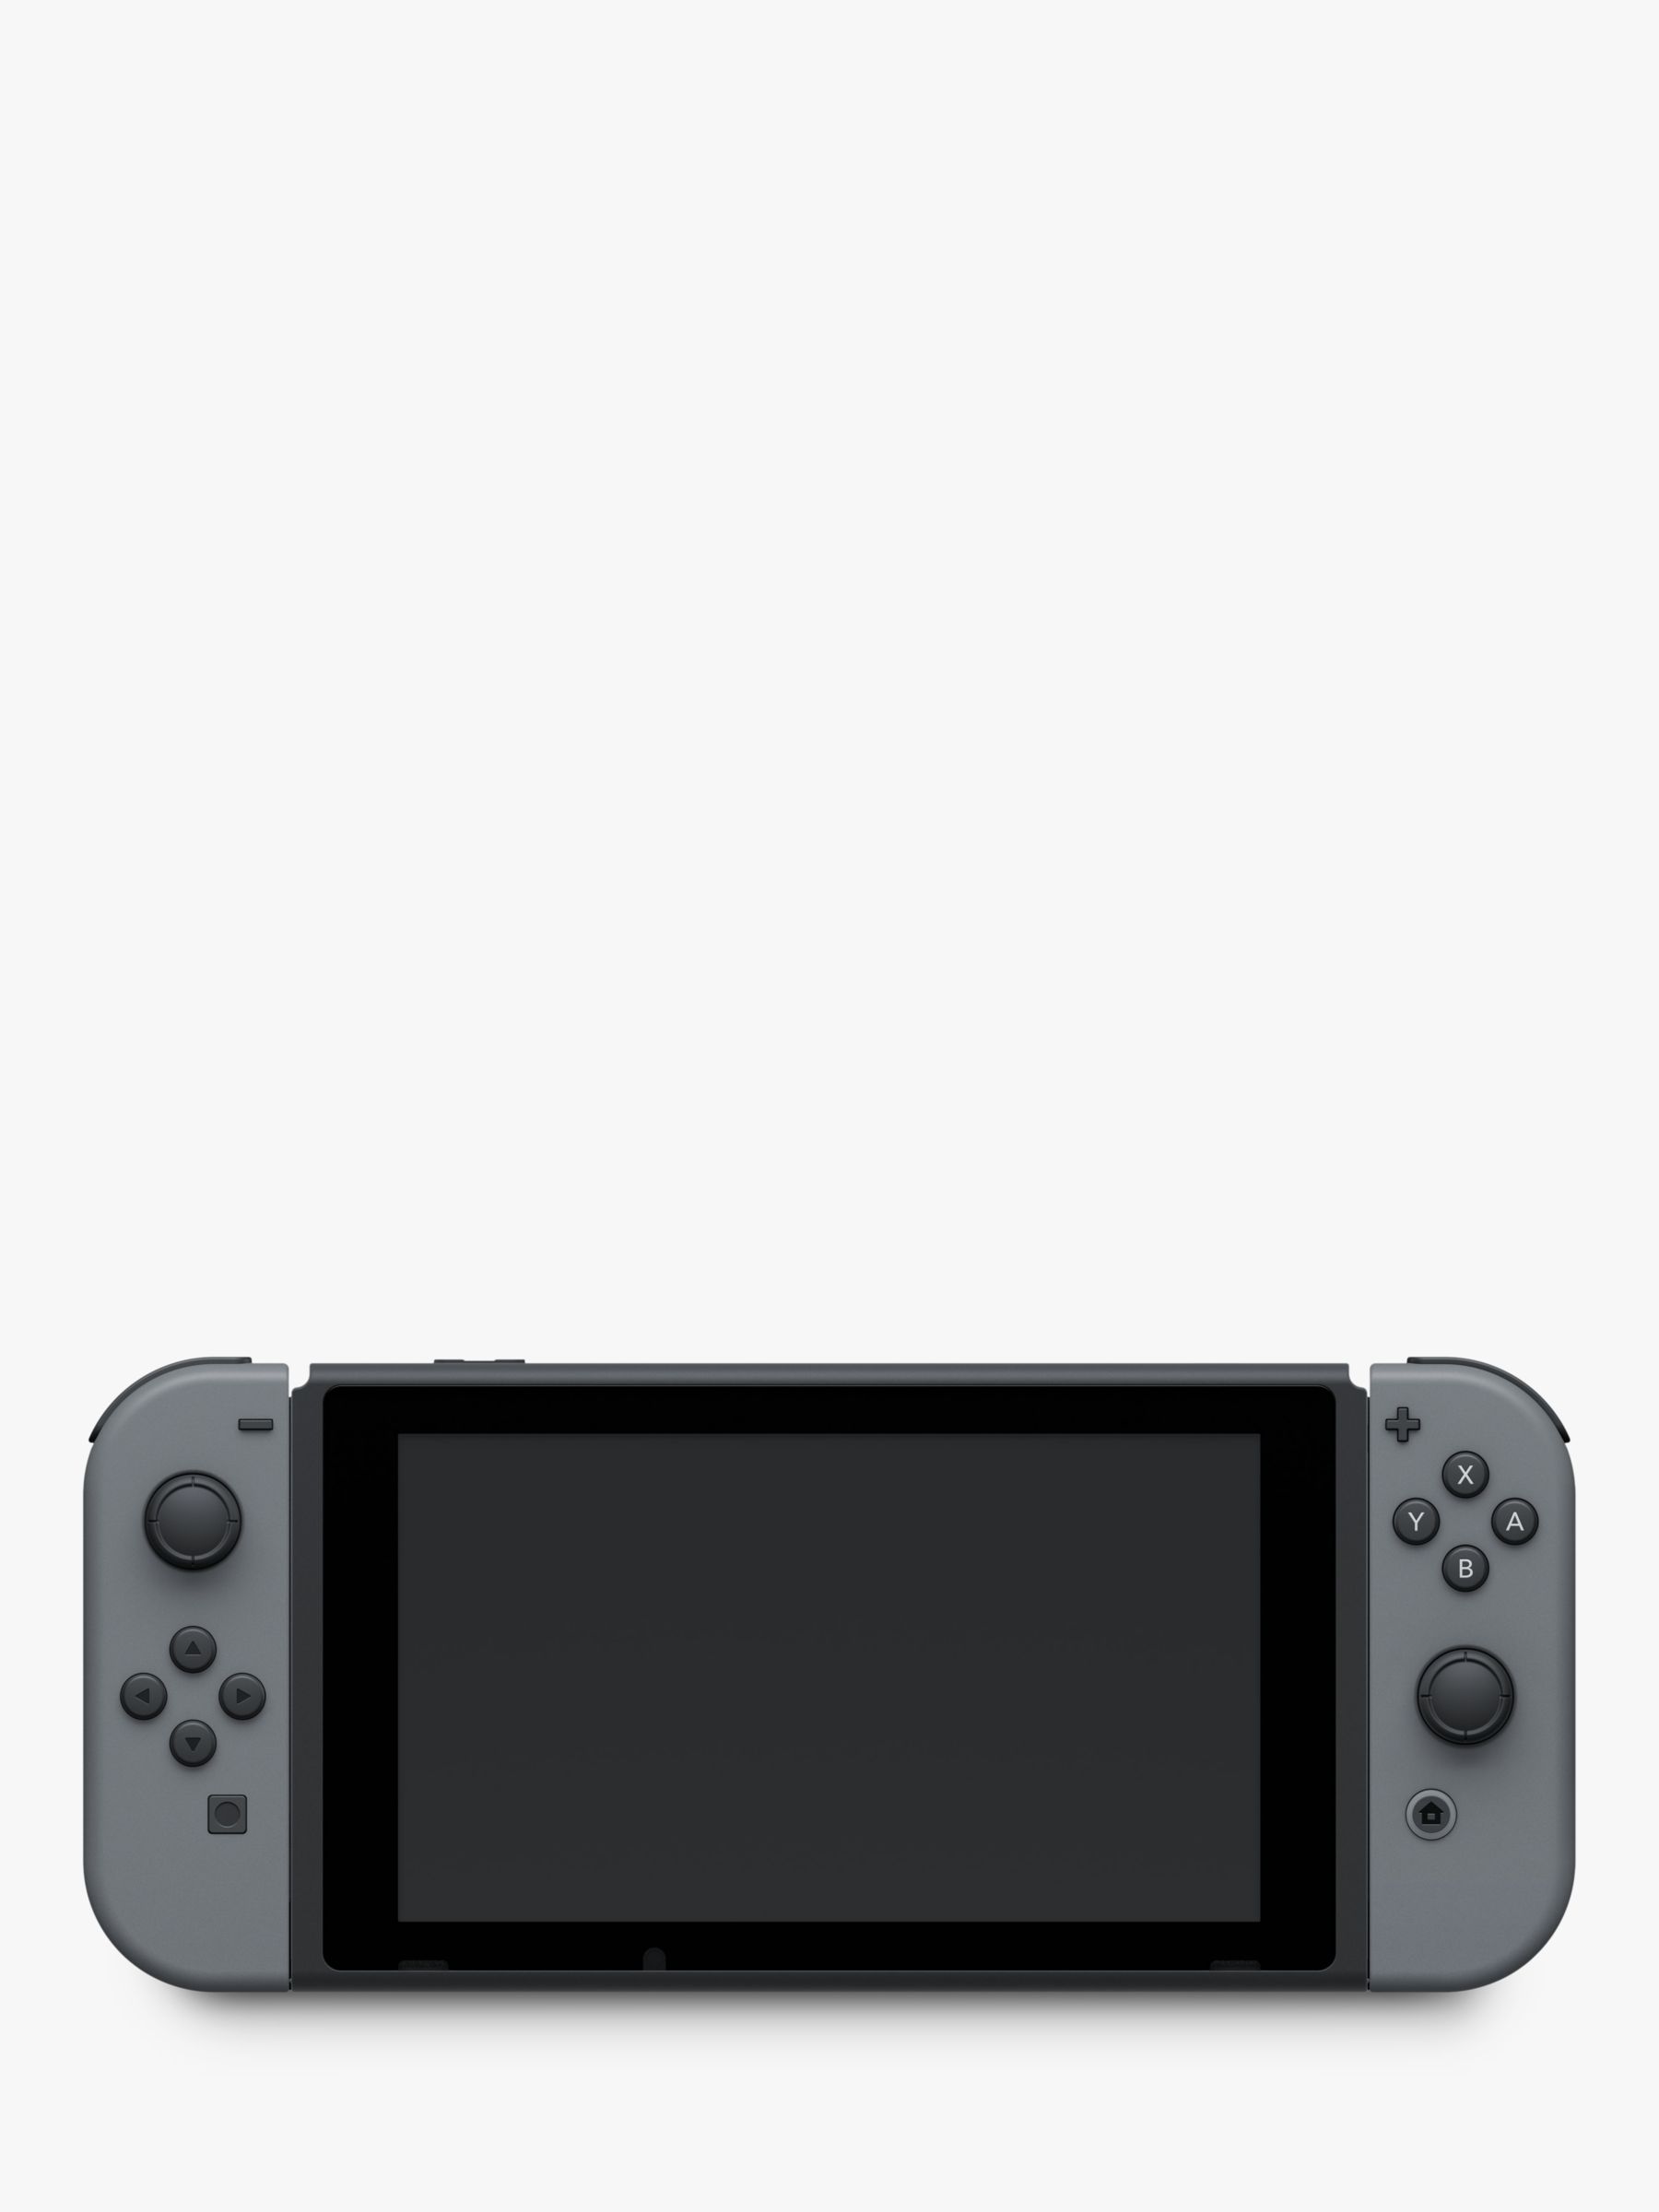 Nintendo Switch 1.1 32GB Console with Joy-Con, Grey